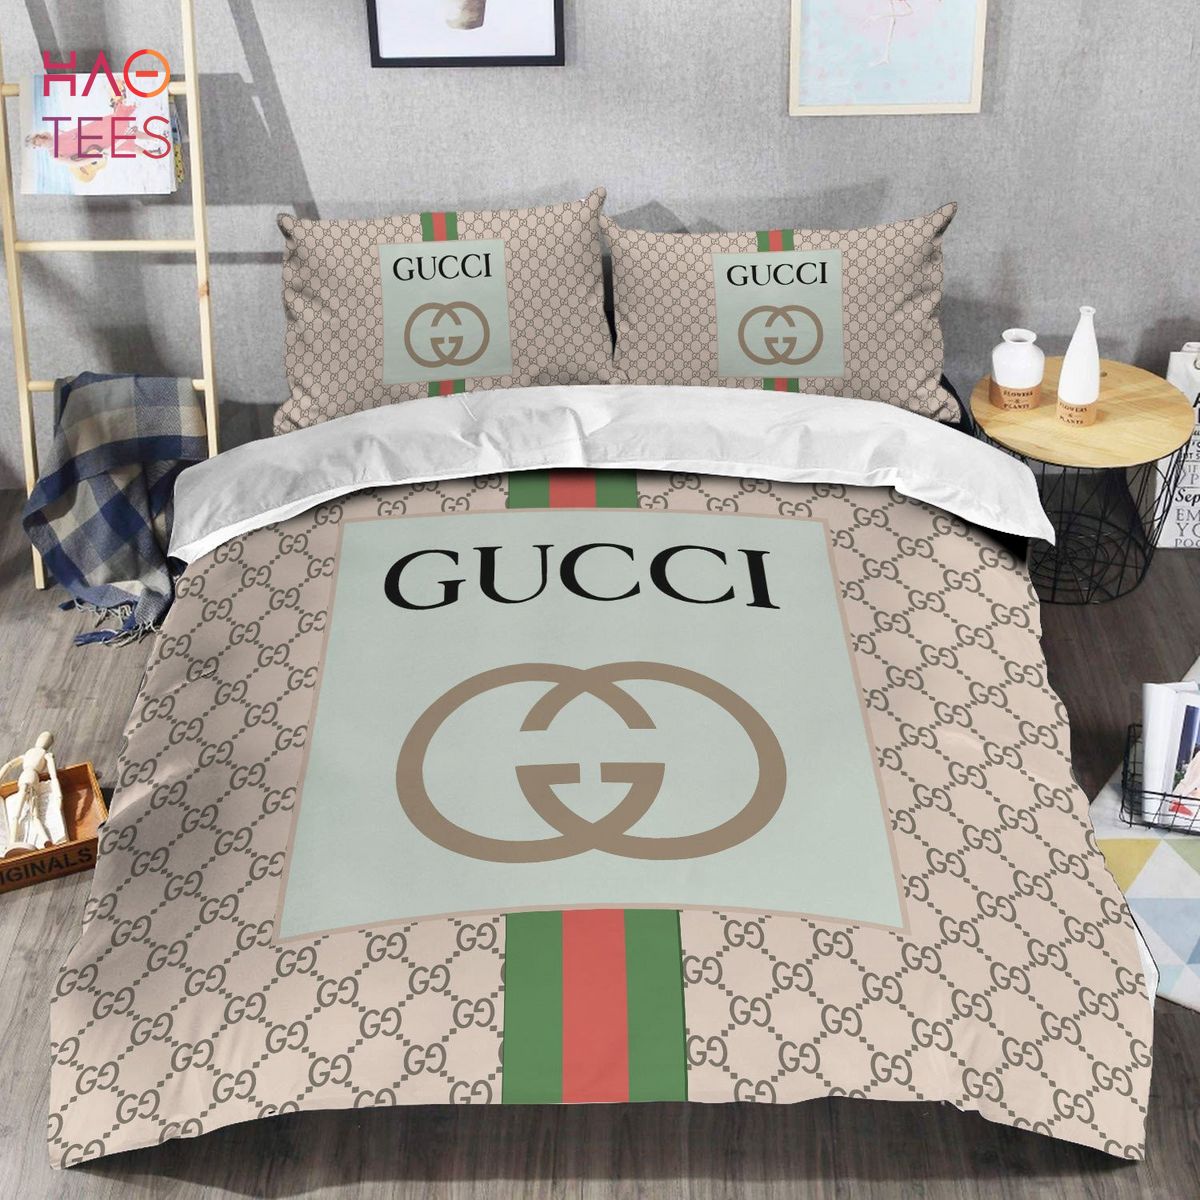 NEW Gucci Luxury Brand Bedding Sets POD Design